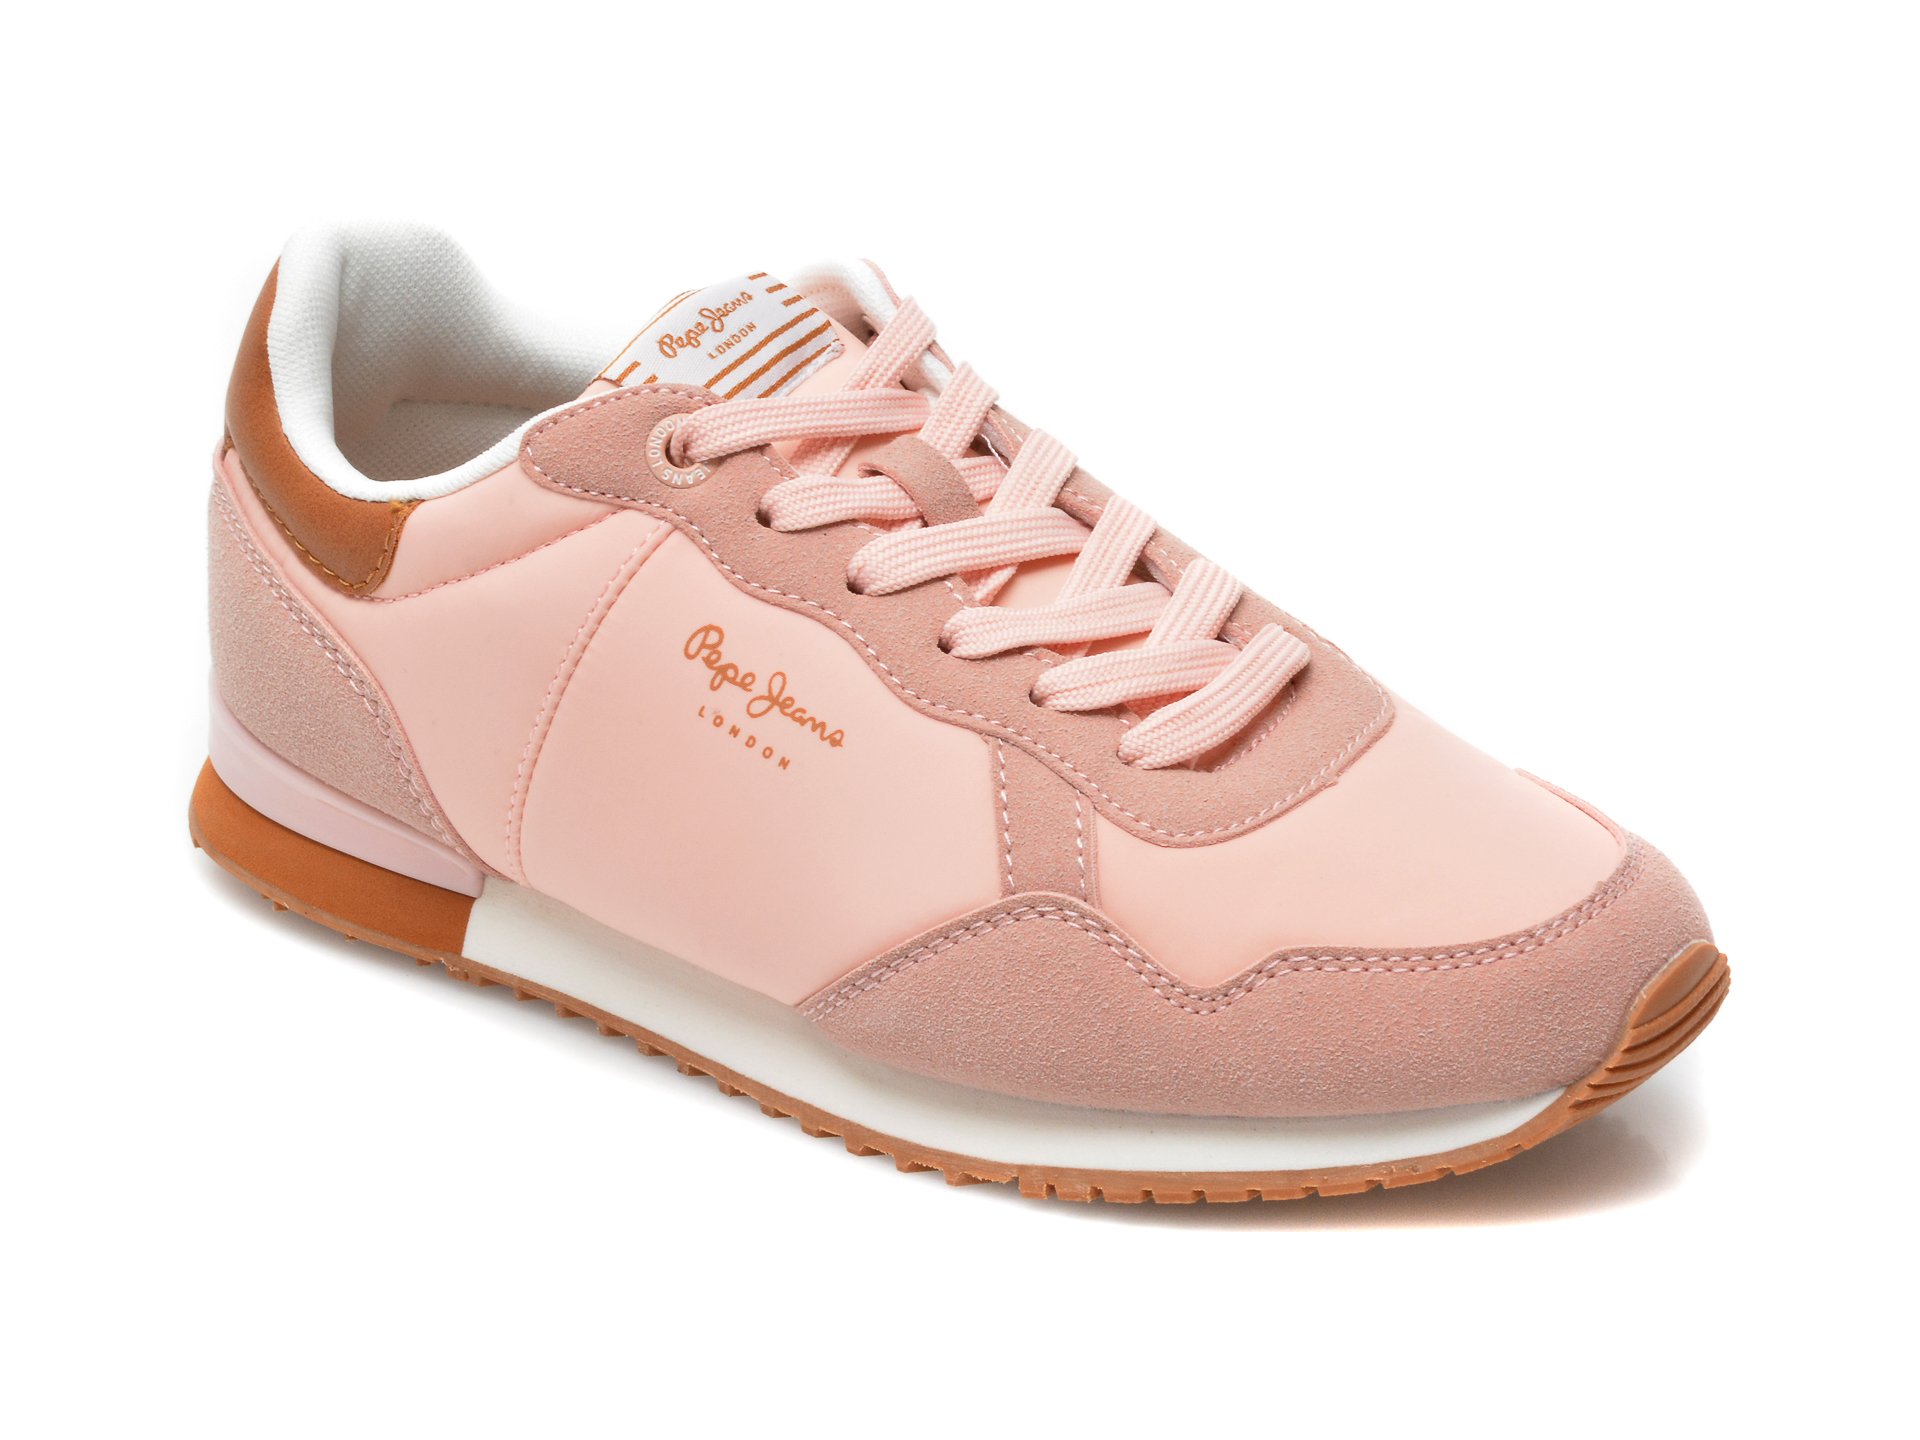 Pantofi sport PEPE JEANS roz, 3110699, din material textil si piele intoarsa